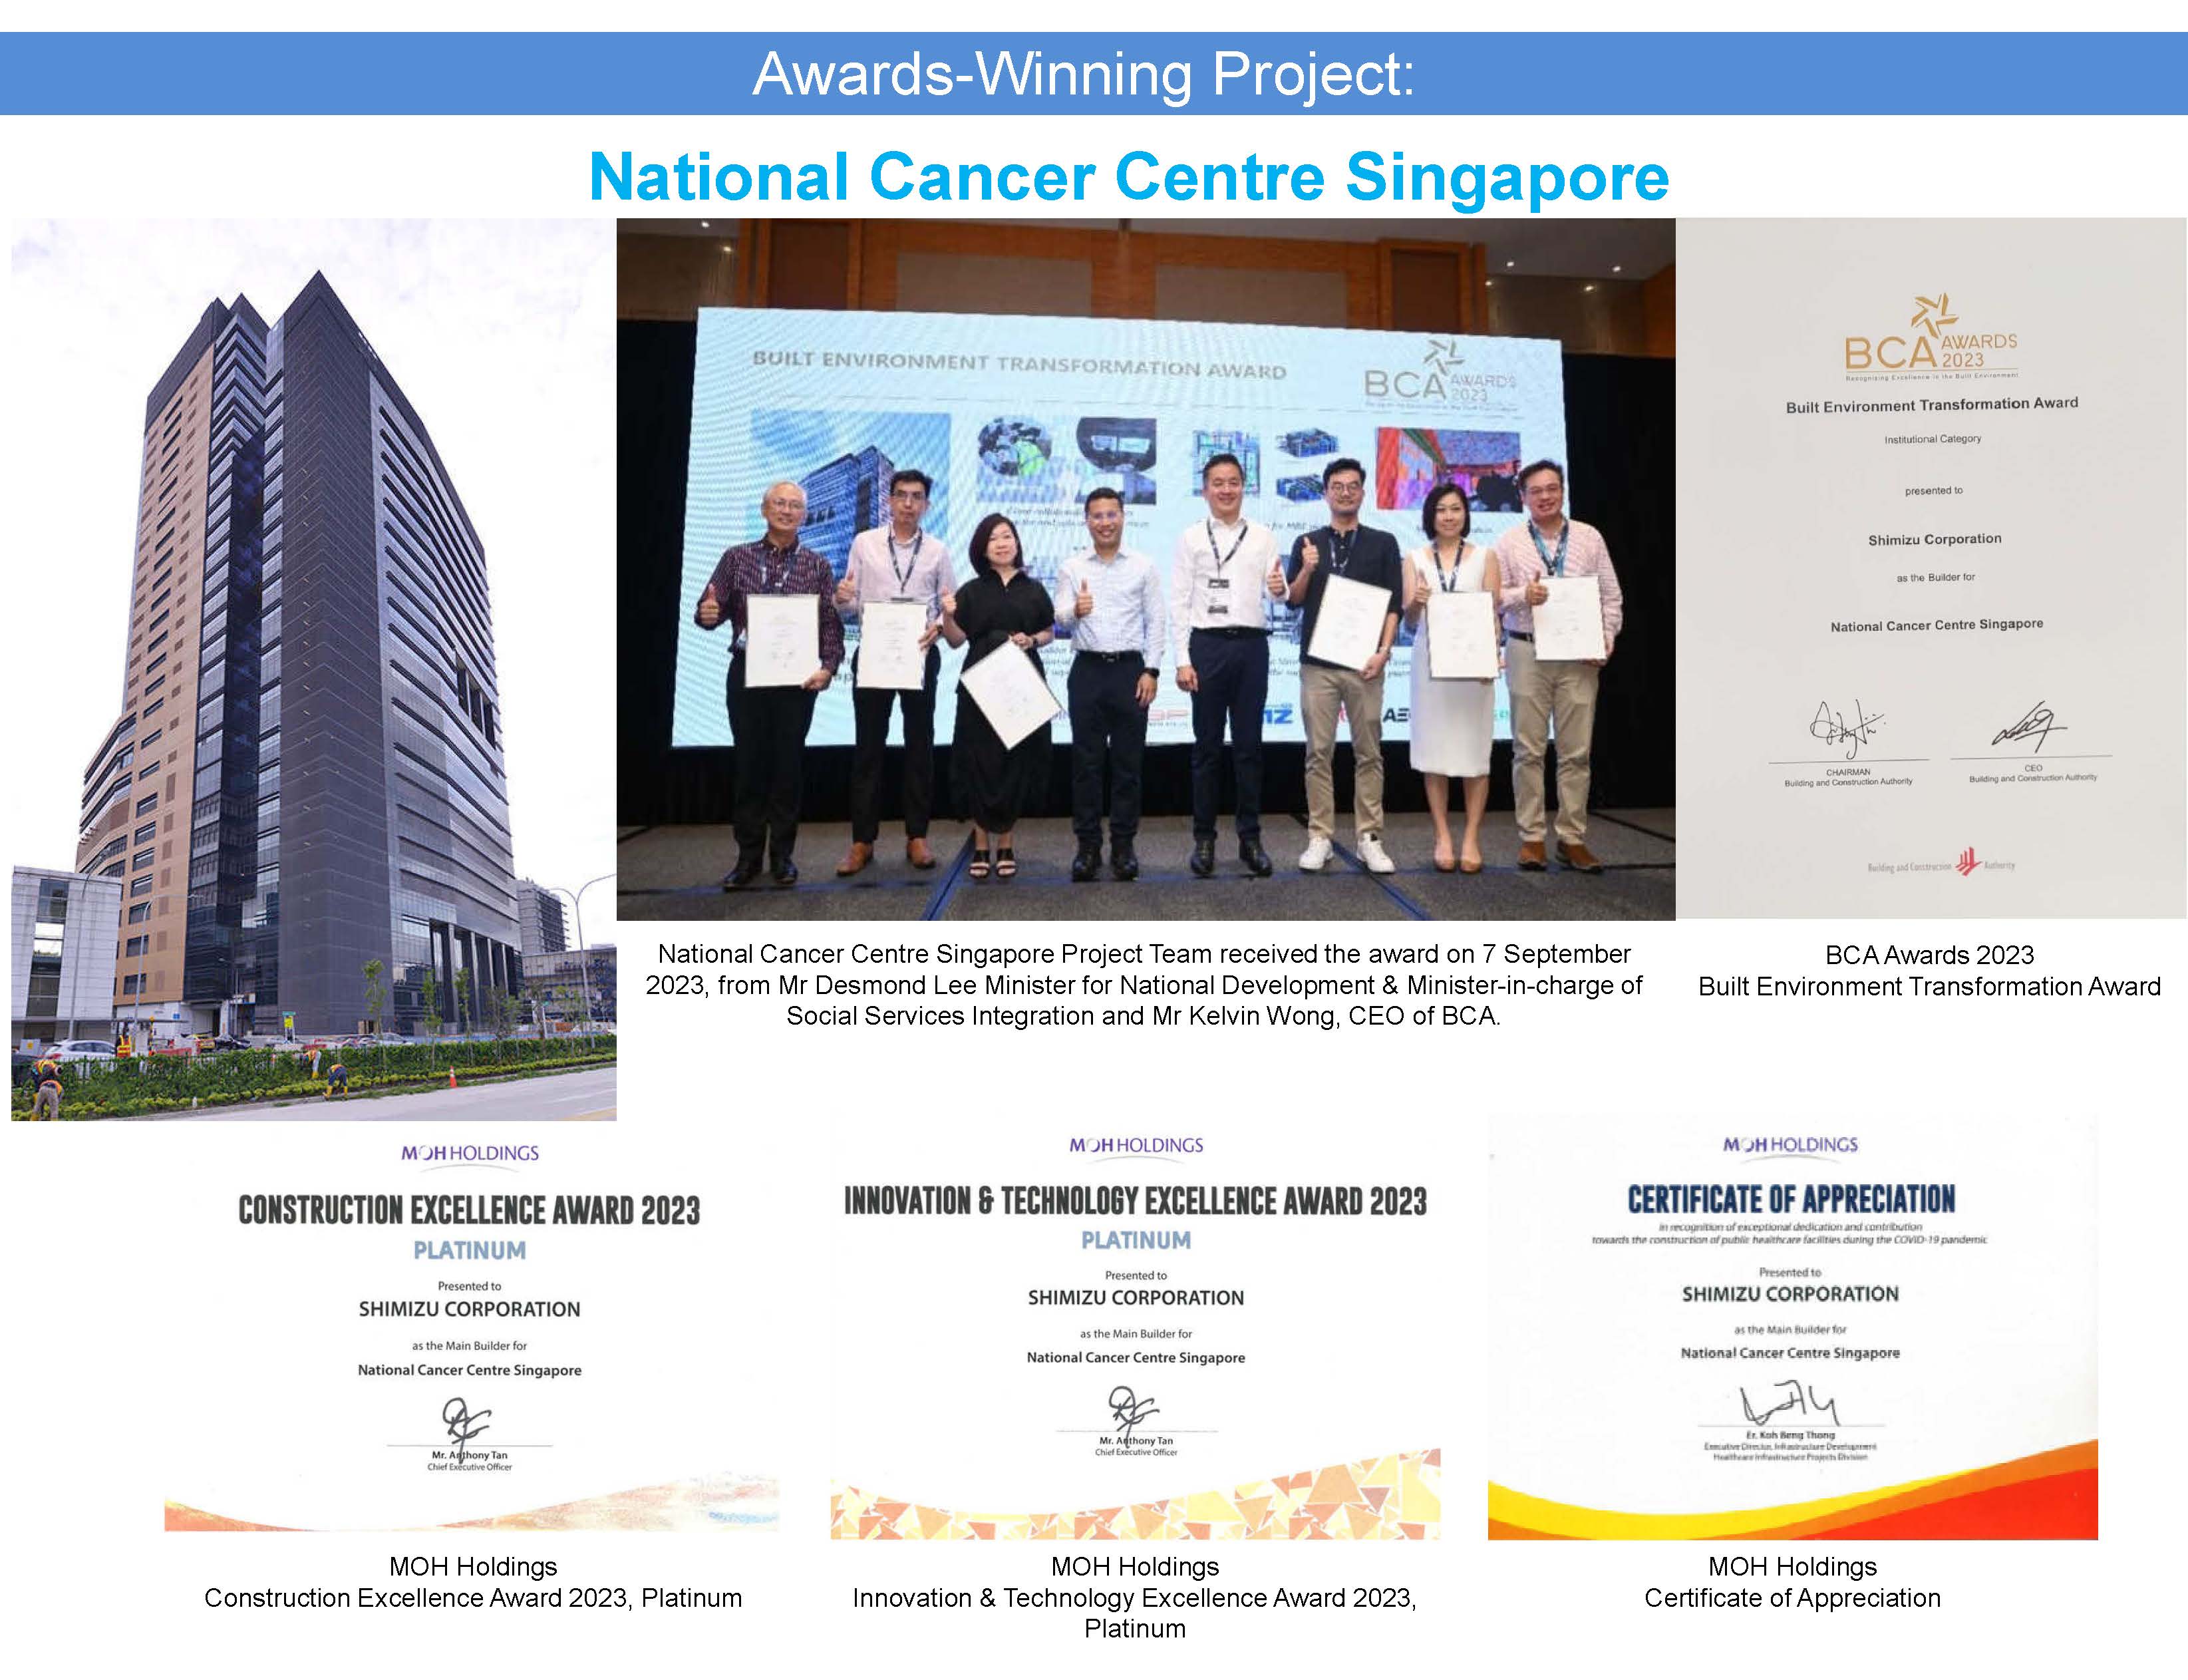 Award: National Cancer Centre Singapore, an award-winning project 